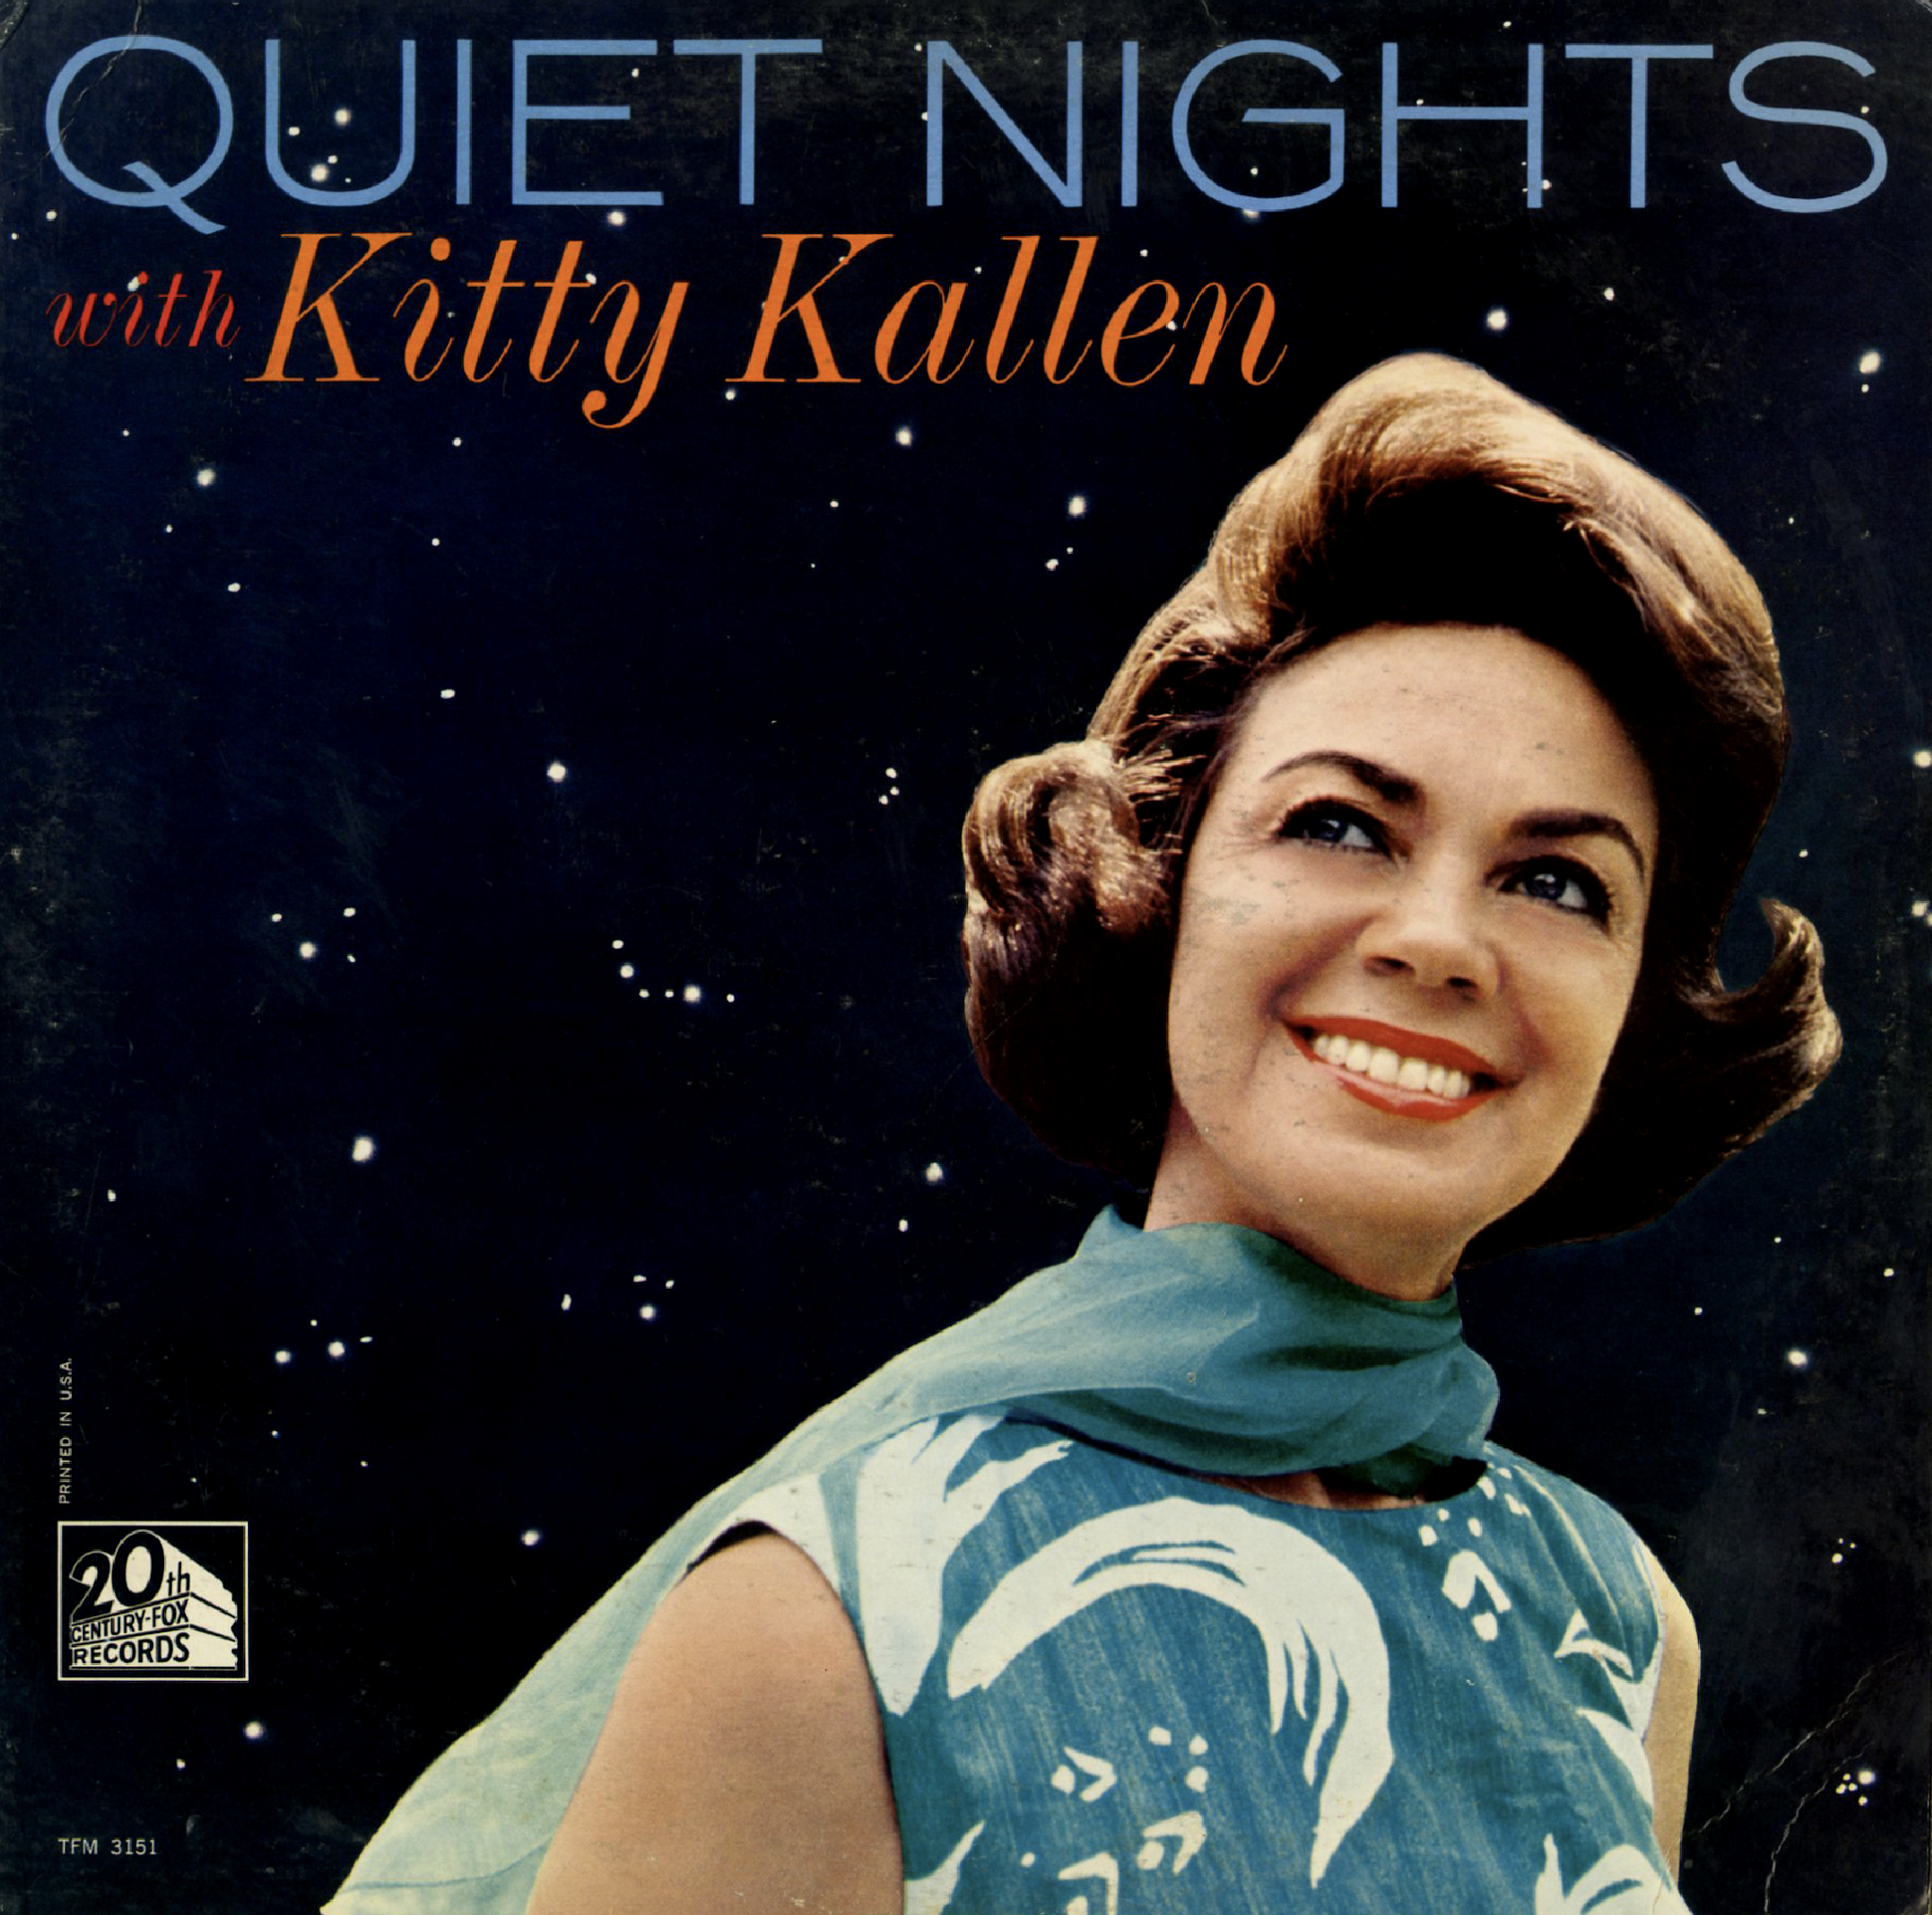 Quite night. Quiet Night. Kitty Kallen книга. Китти песня слушать. Купить пластинку Katy Kallen.